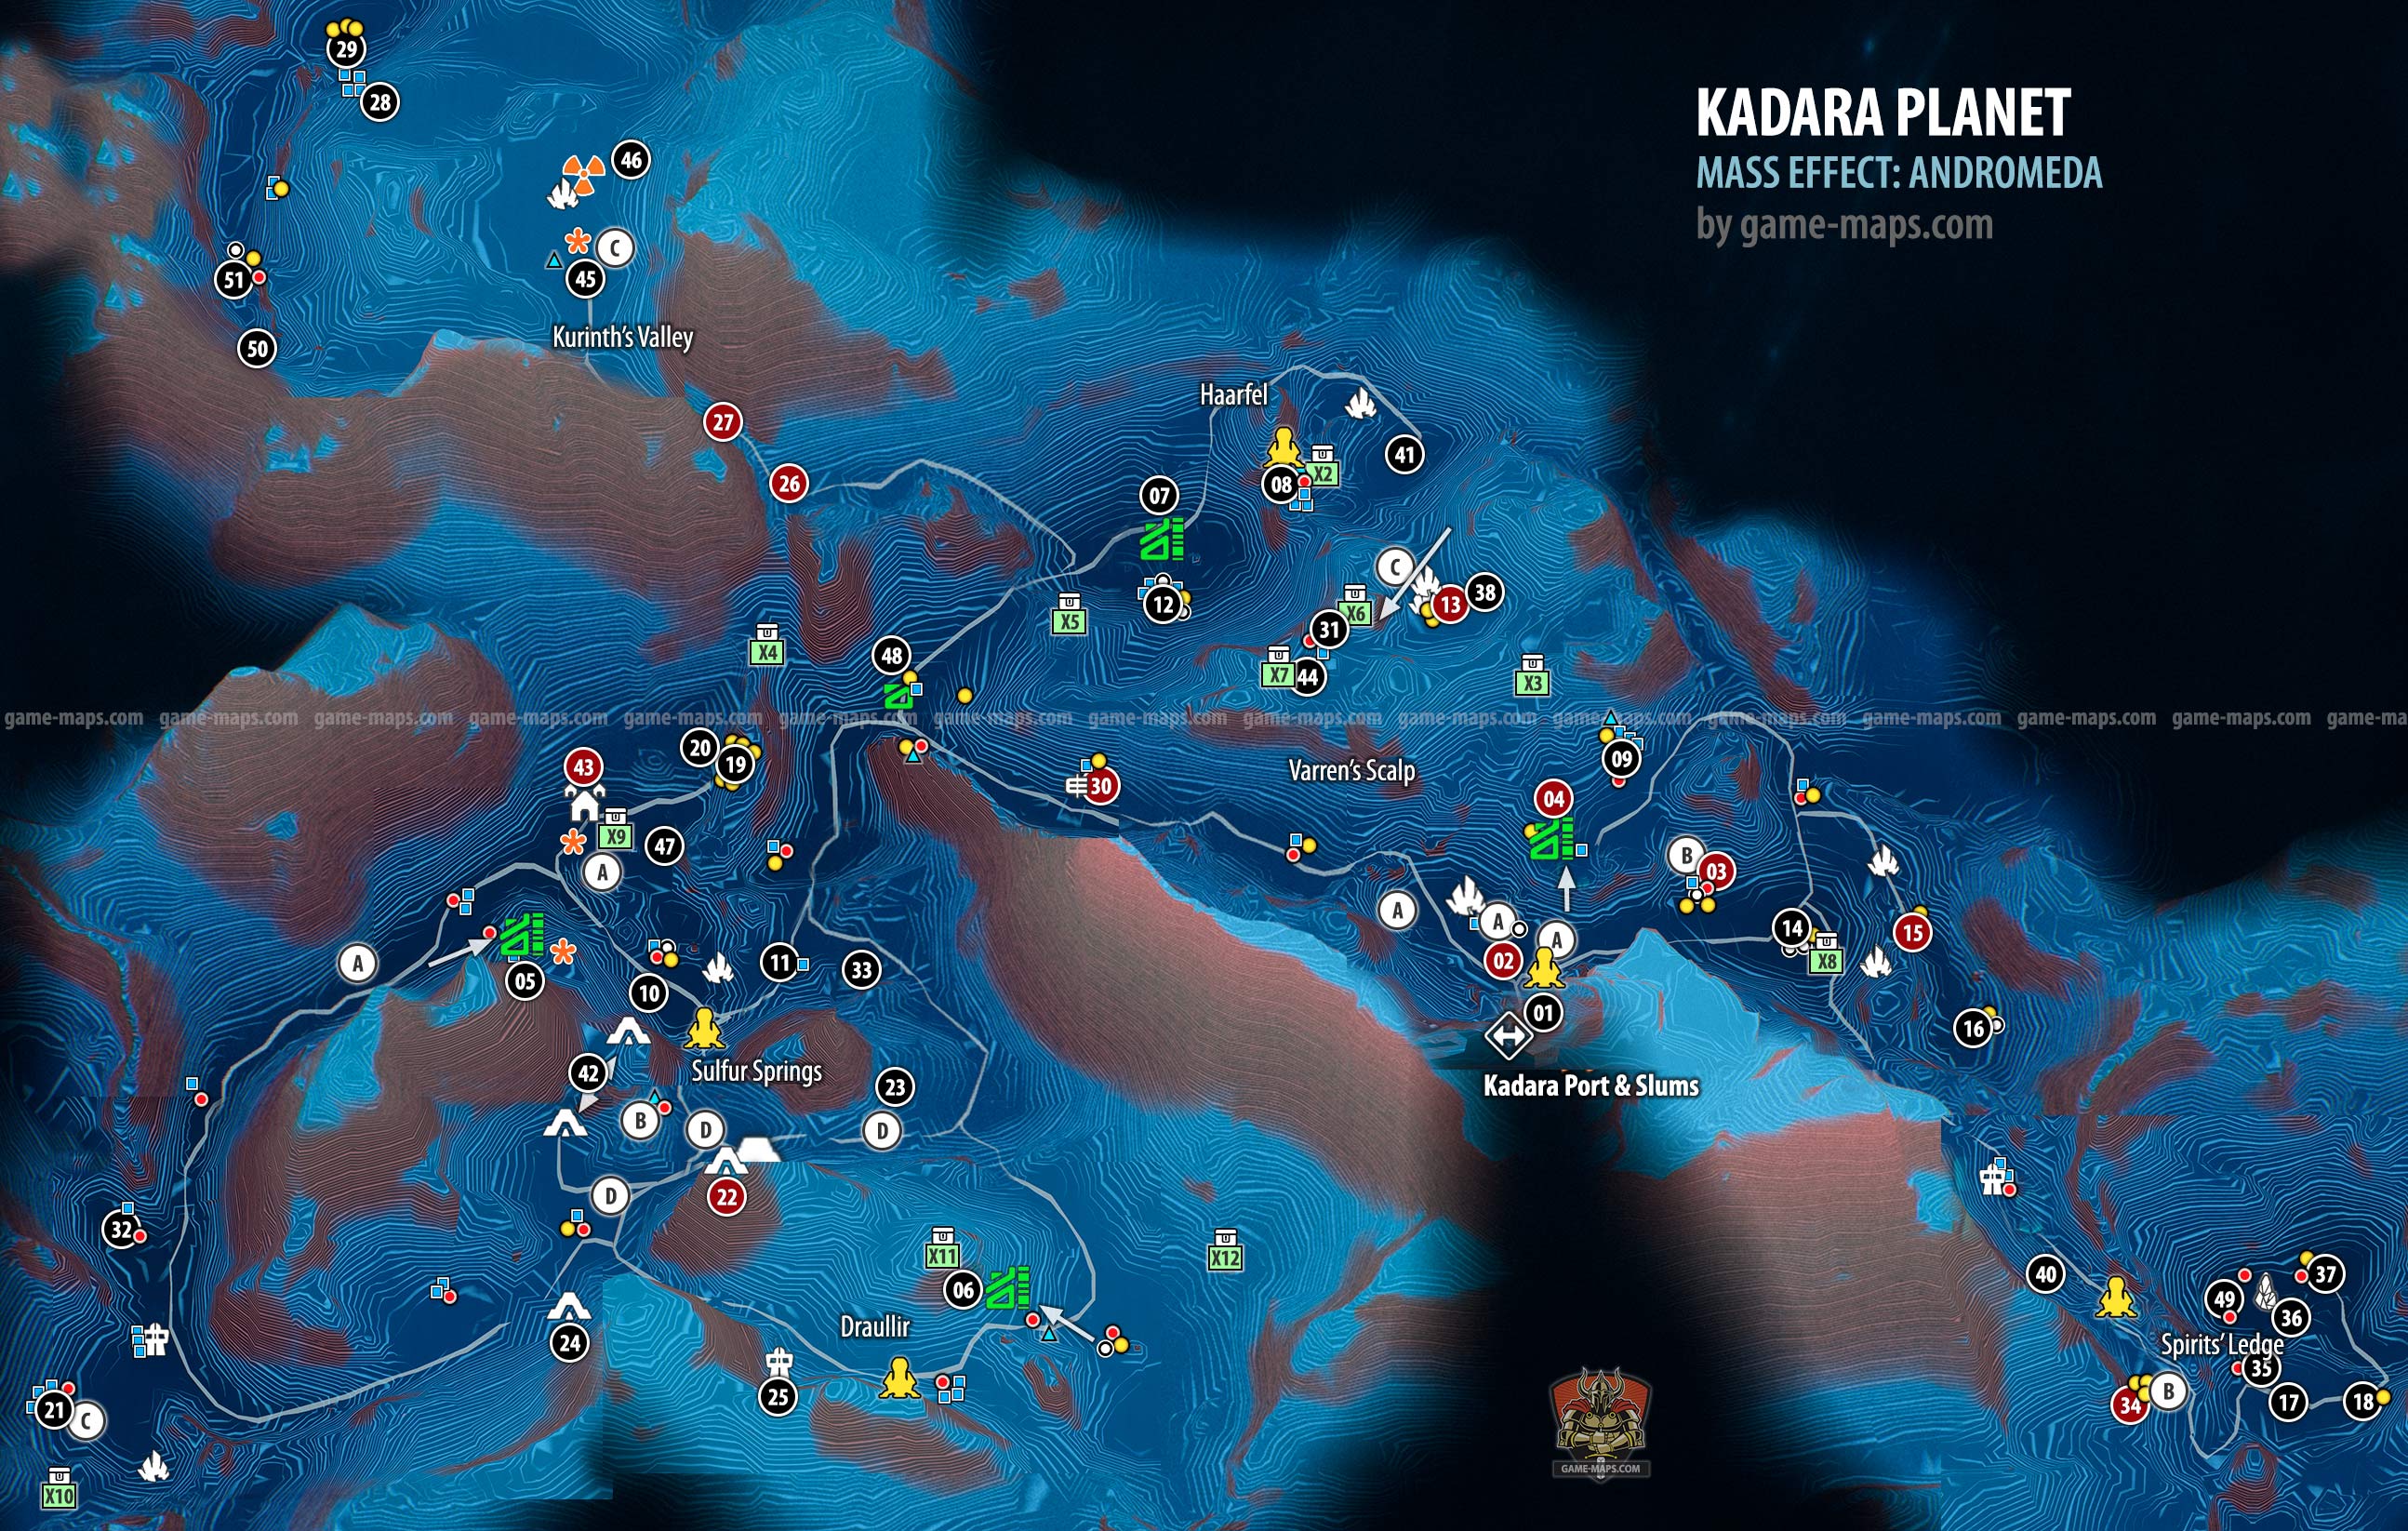 Kadara Planet Map for Mass Effect Andromeda